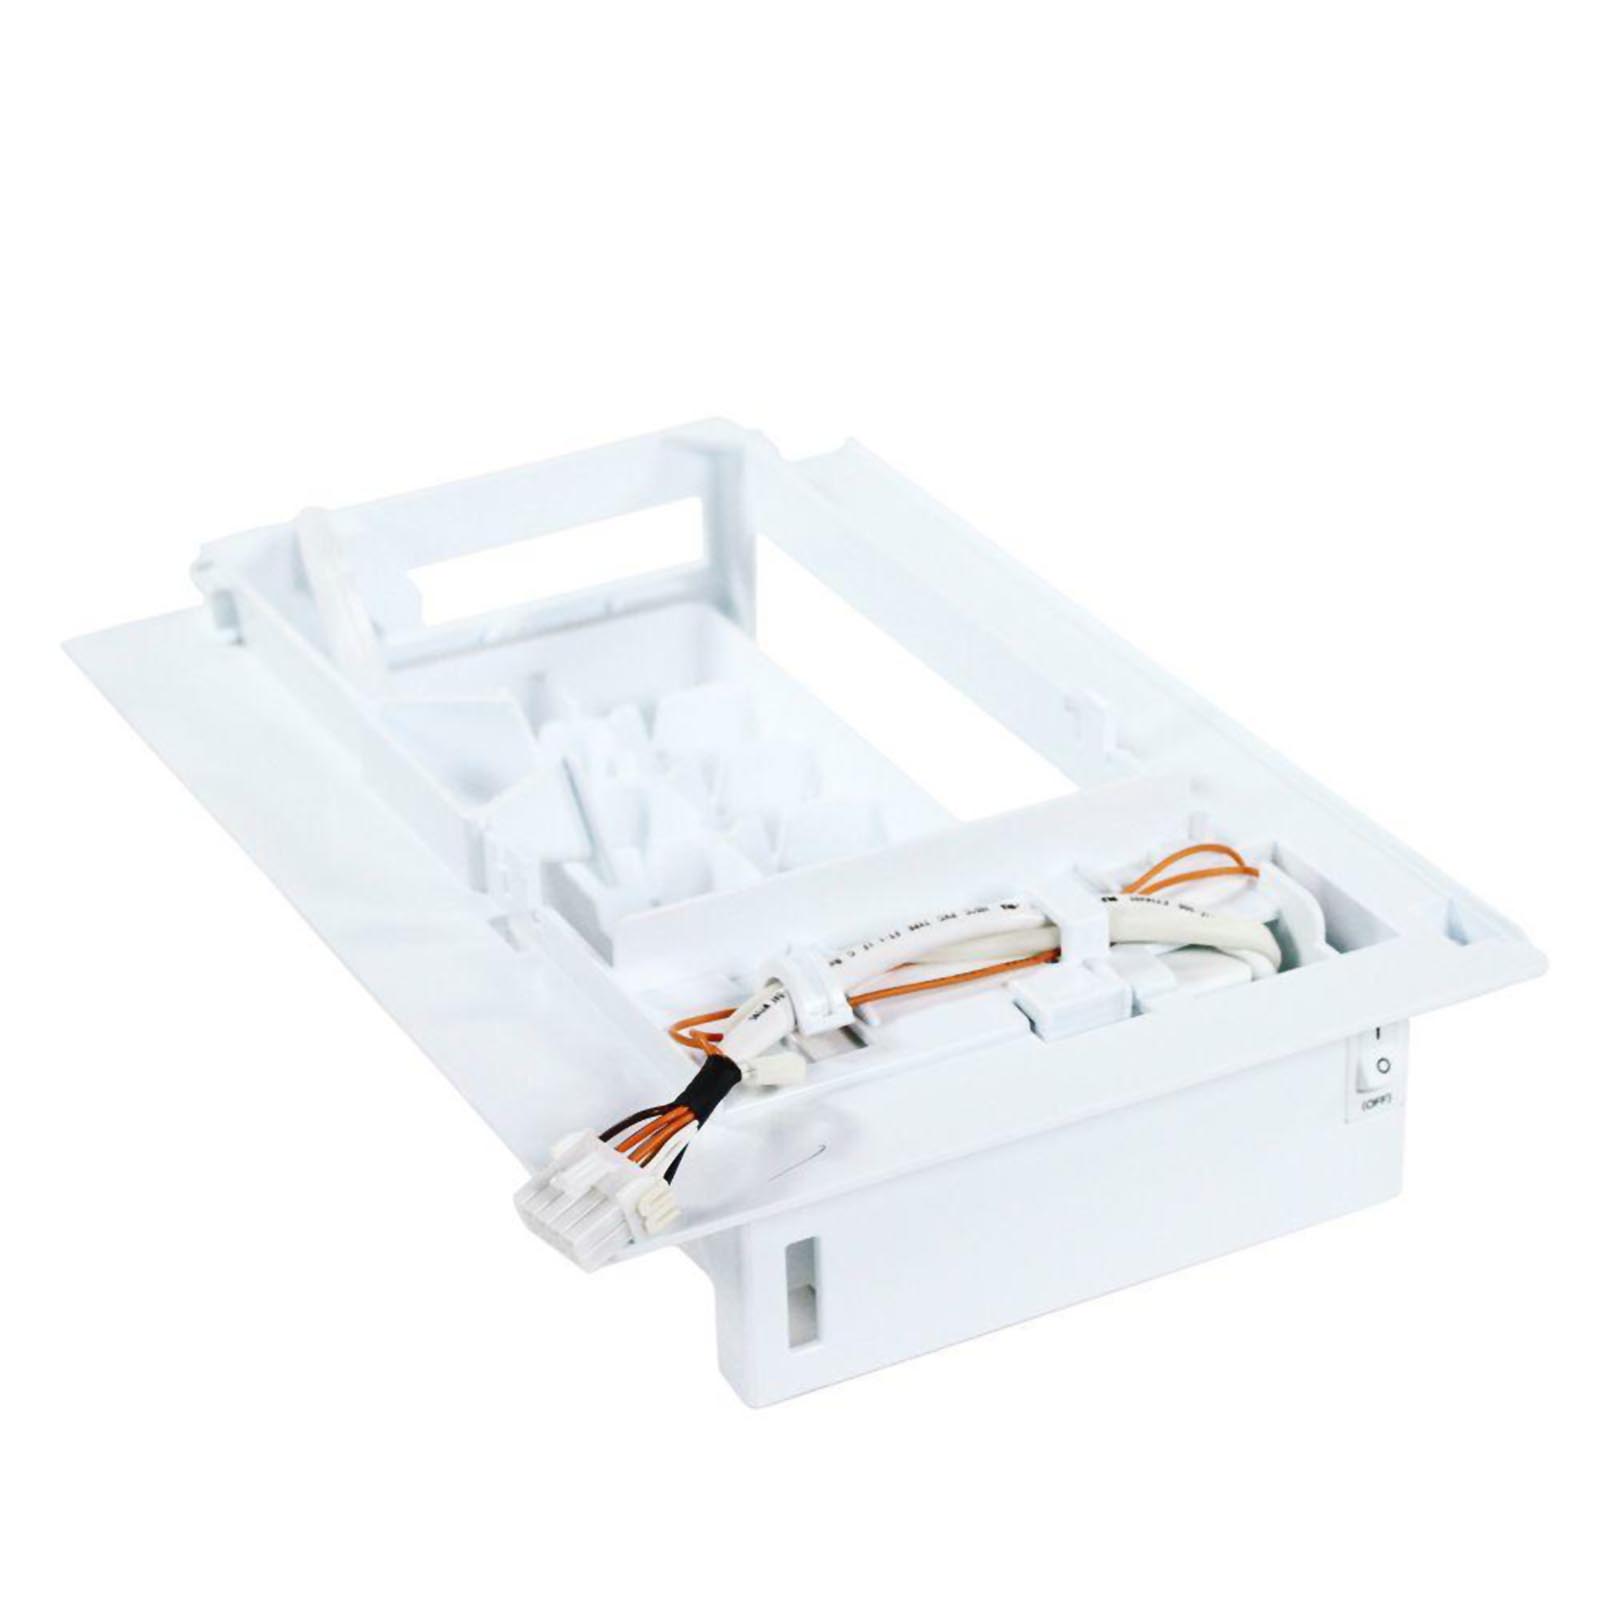 LG ADIB00M107Z46 Refrigerator Ice Maker Assembly Kit